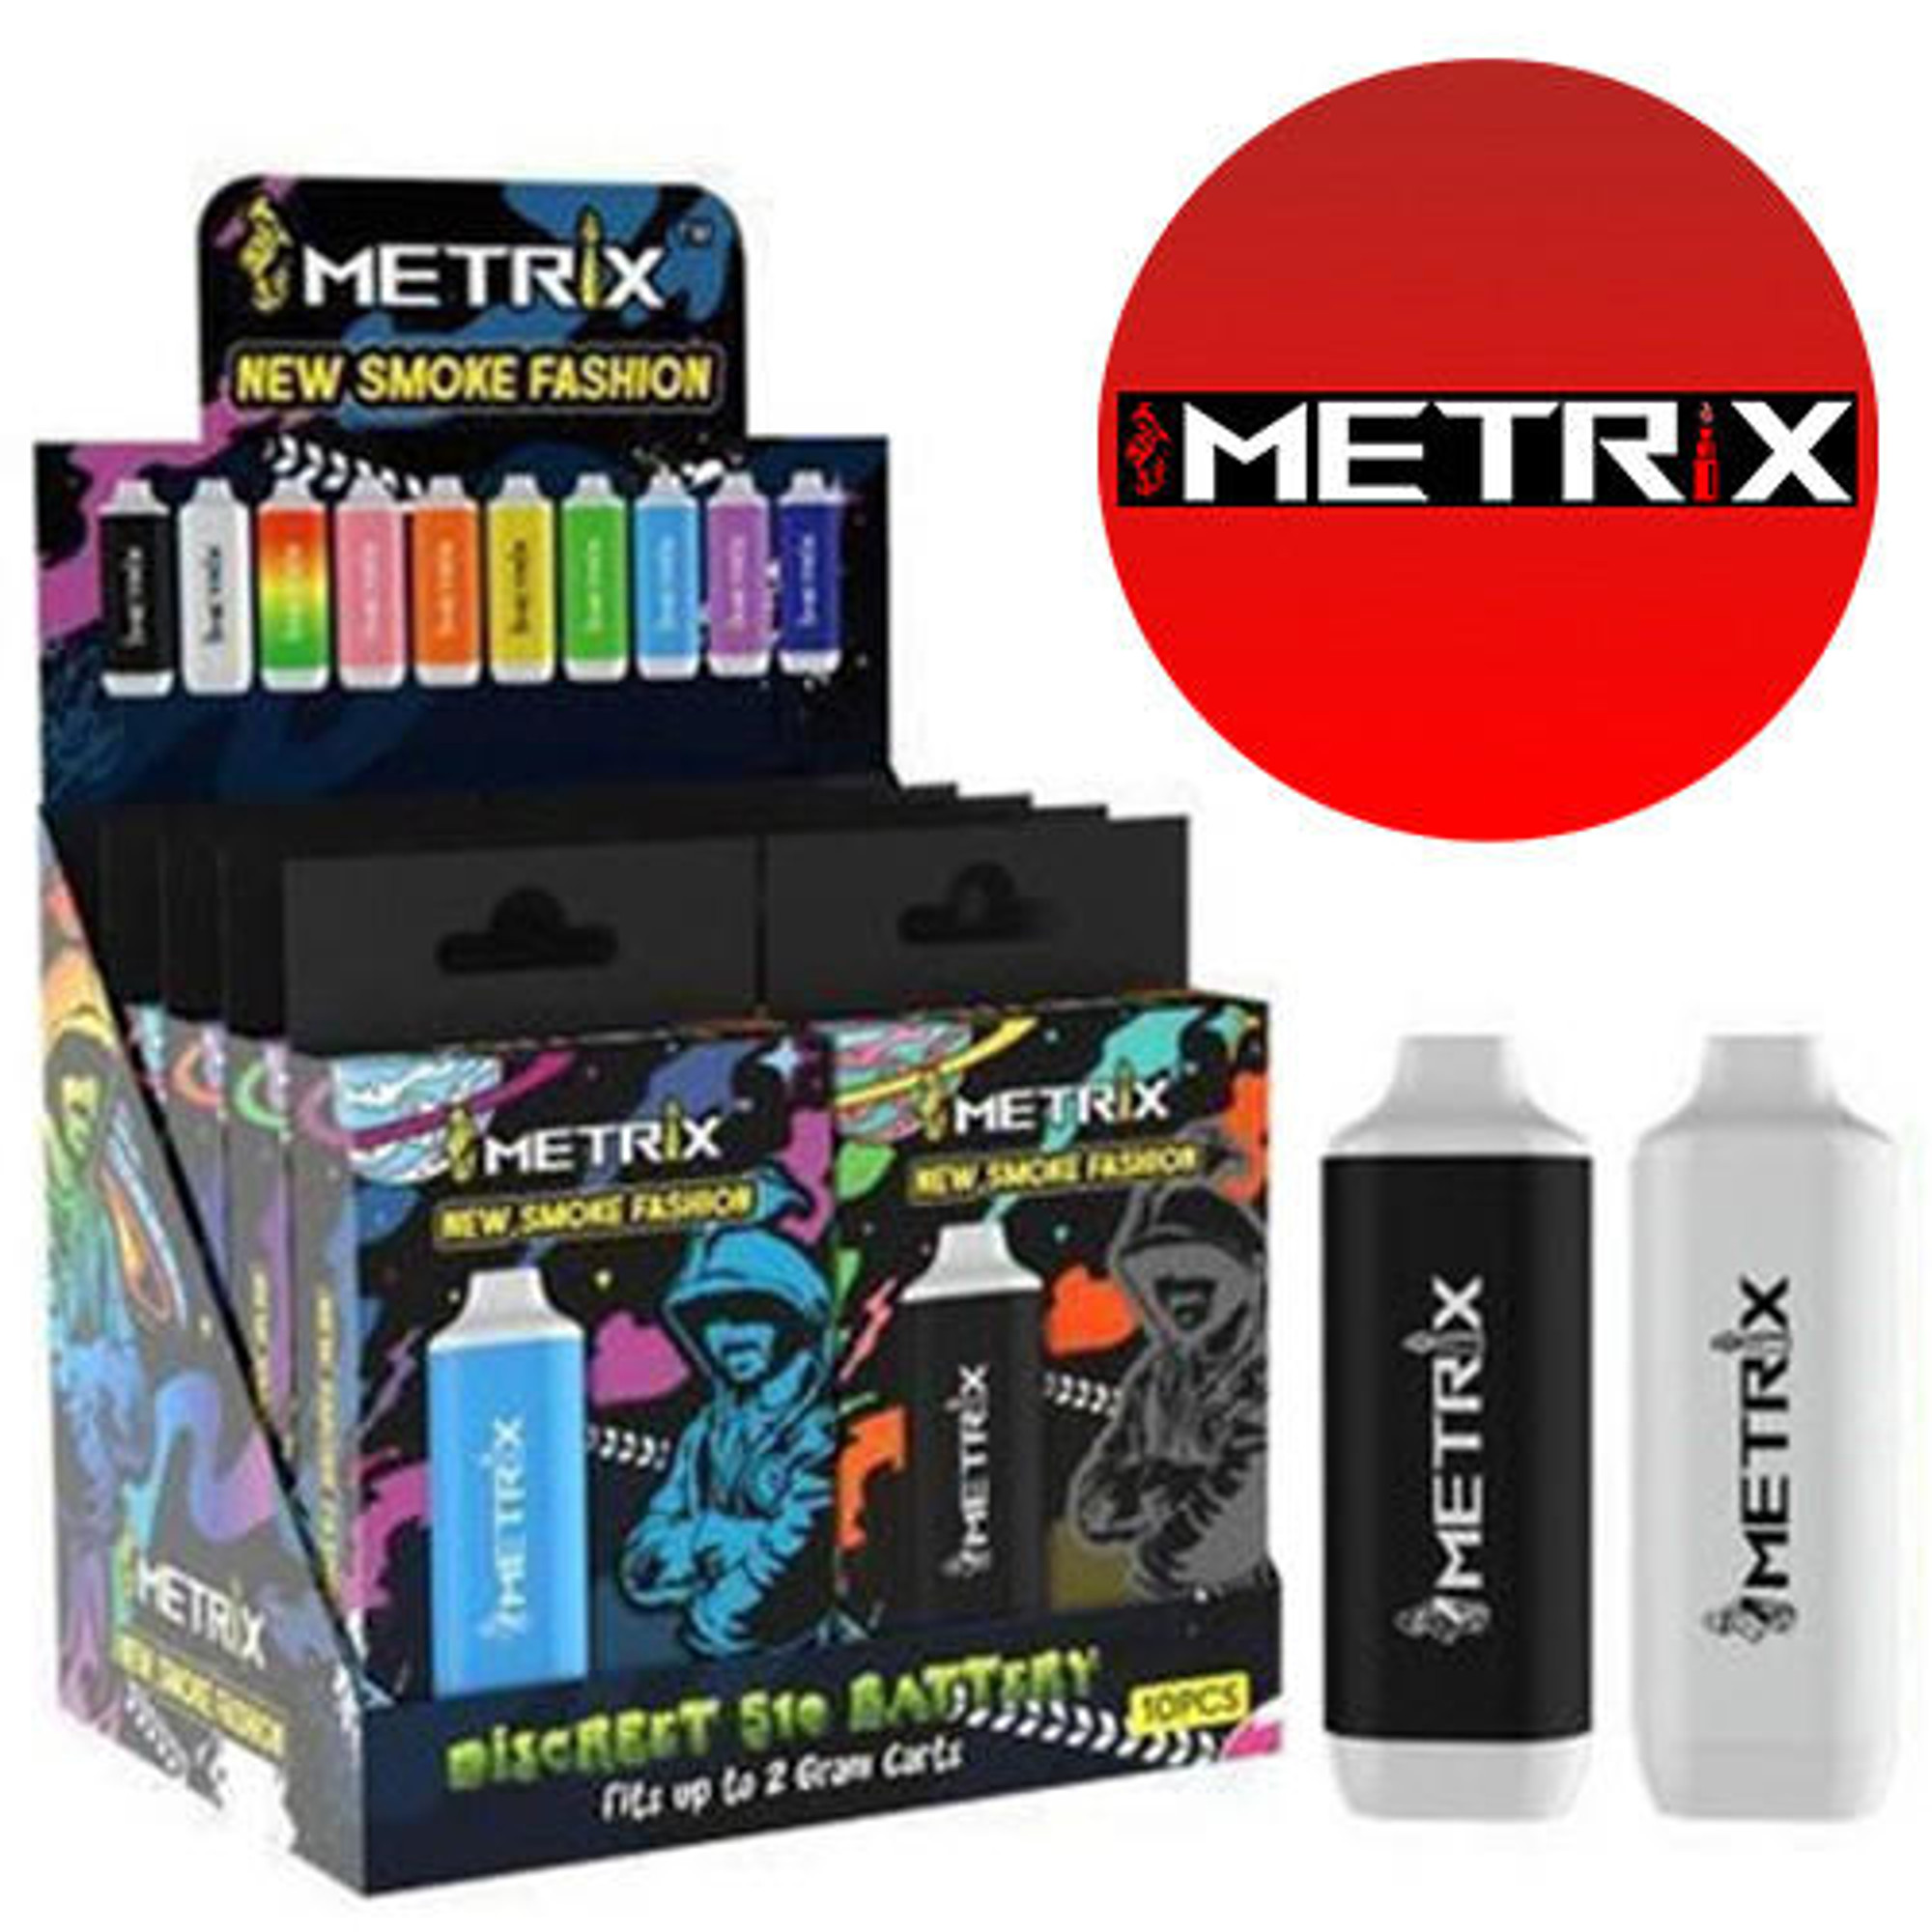 METRIX NEW SMOKE FASHION 510 MIXED COLOR BATTERY DISPLAY - 10CT